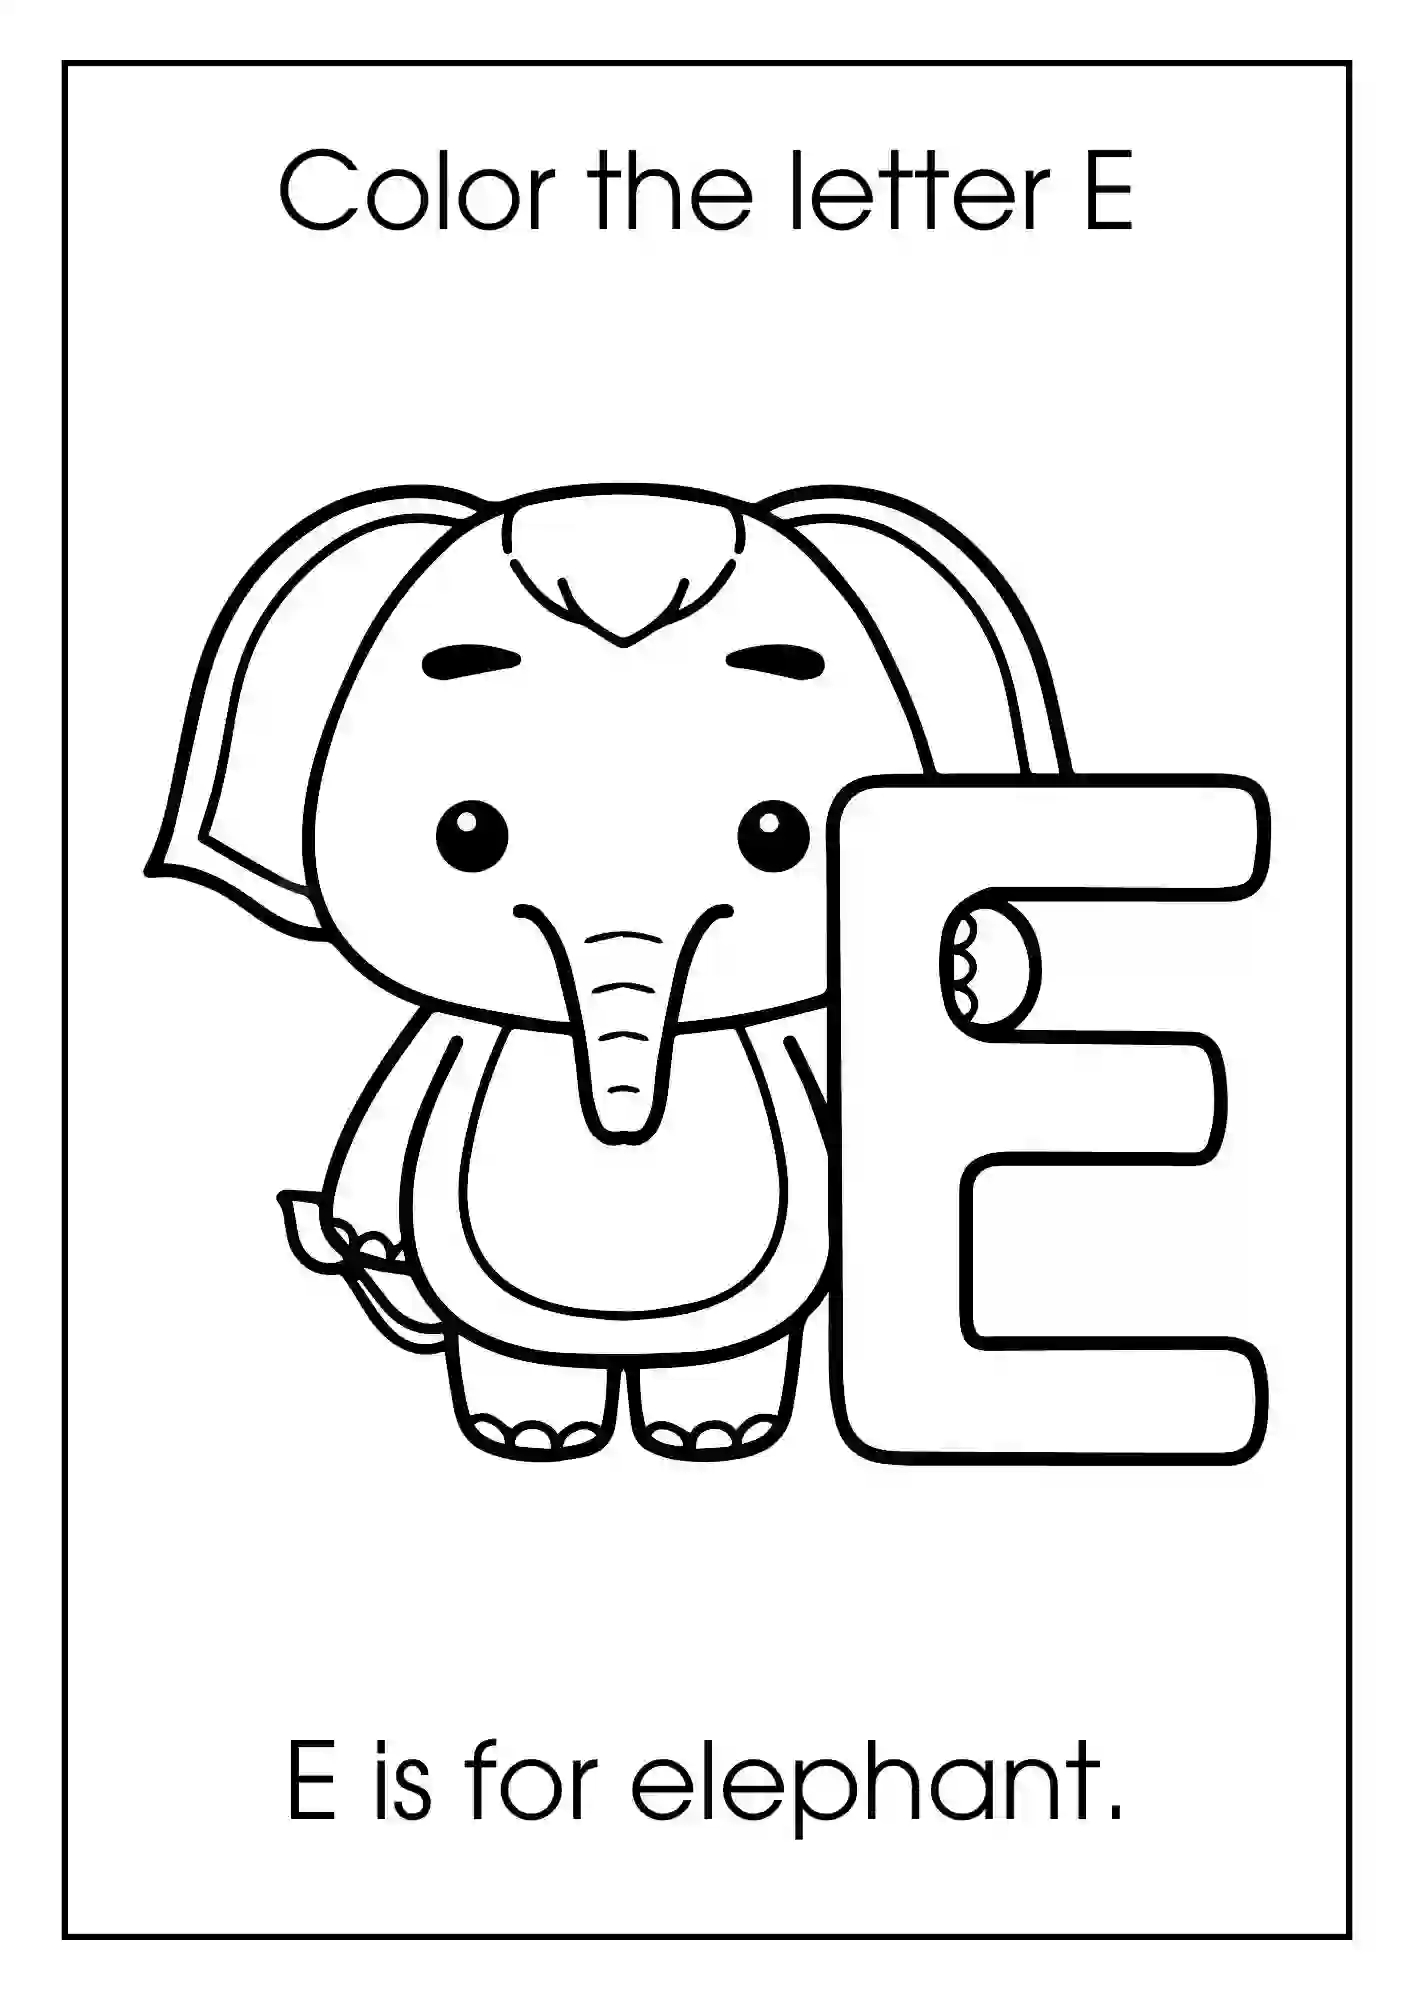 Animal Alphabet Coloring Worksheets For Kindergarten (Letter e with elephant)